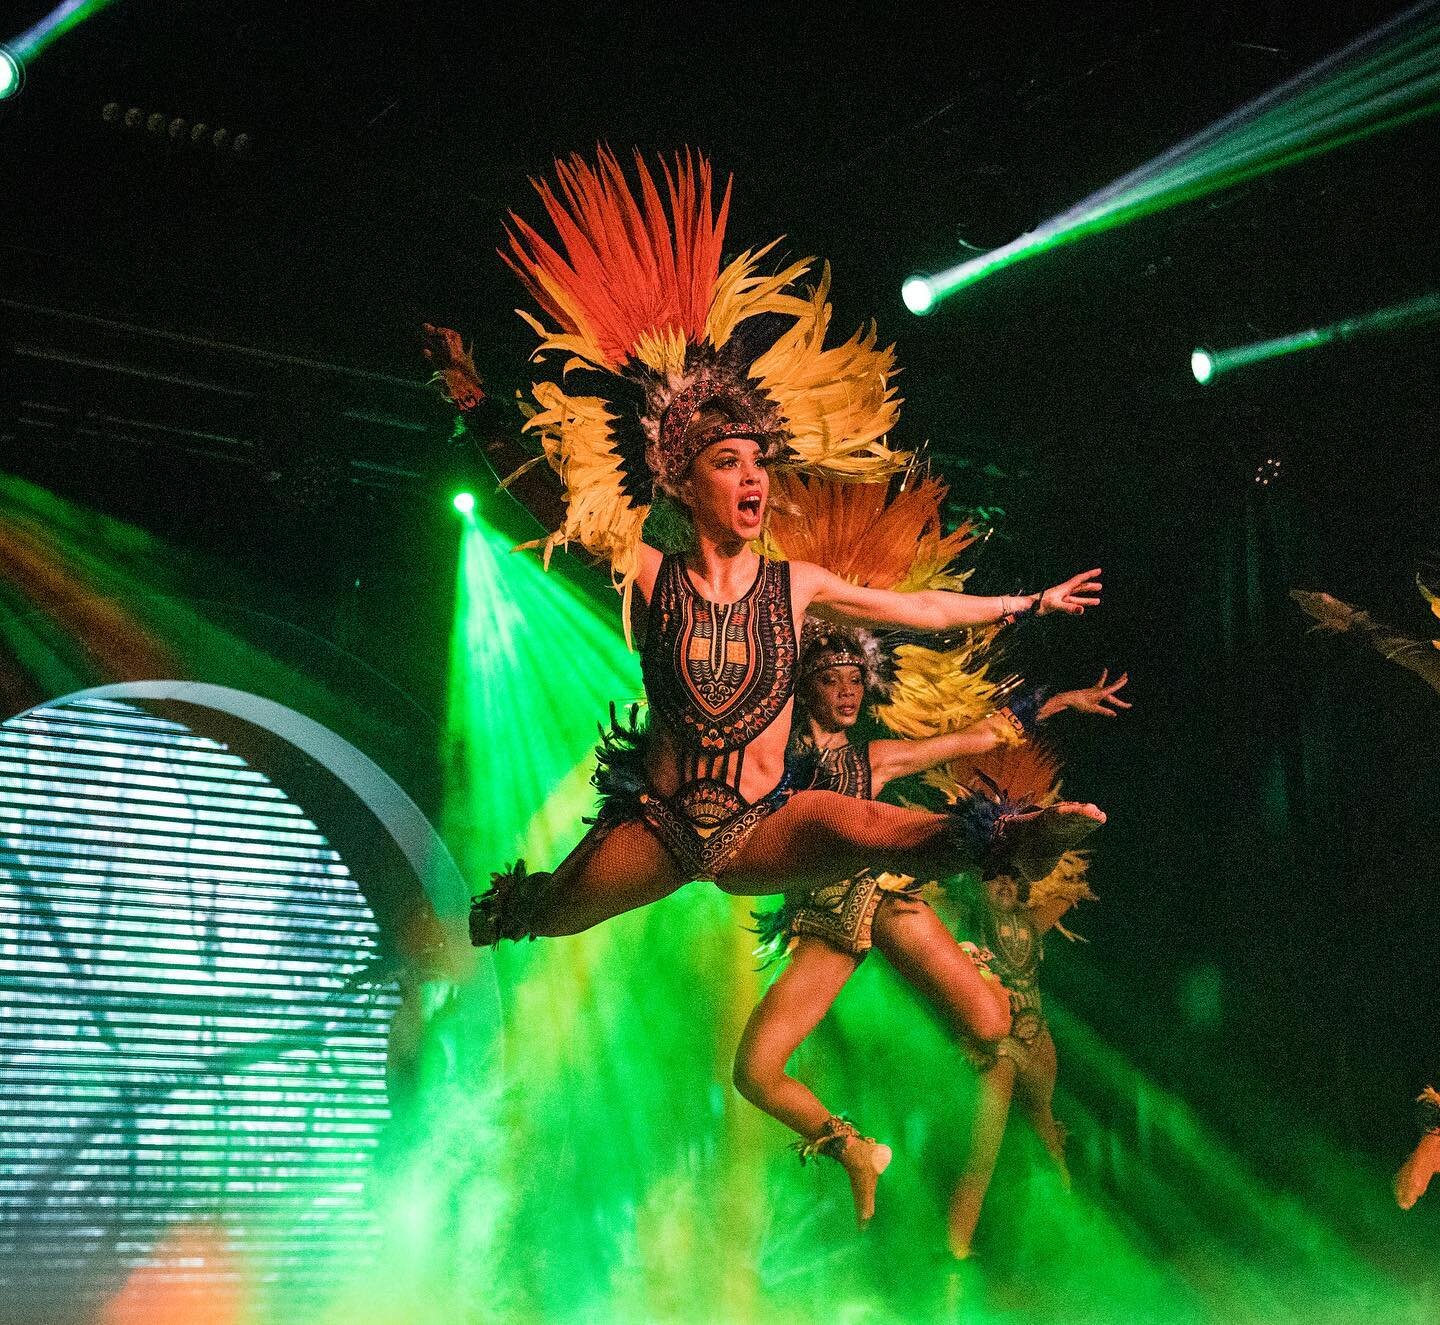 @kriokshow at @moustachecabaret

 
@l.crp_photographie 📸
@gordeeva_helena 💃🏽 

#kriok #kriokshow #brasil #moustachecabaret #show #dancer #indio #guerreiro #cabaretshow #musichall #grandecart #indien #plume #costume #danseuse